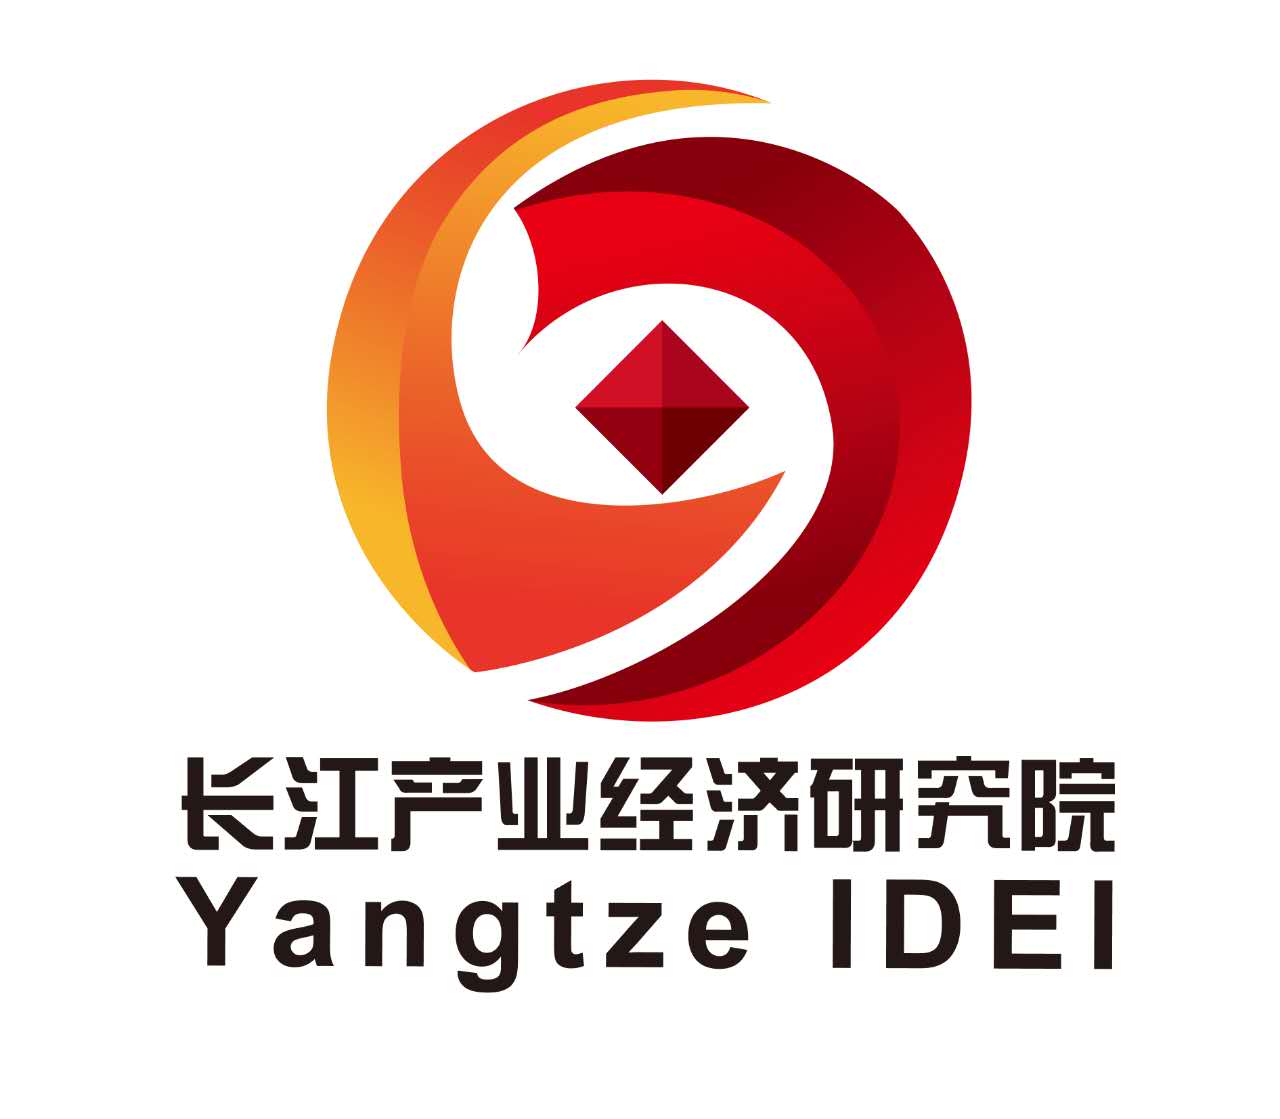  Yangtze River Industry and Economy Think Tank